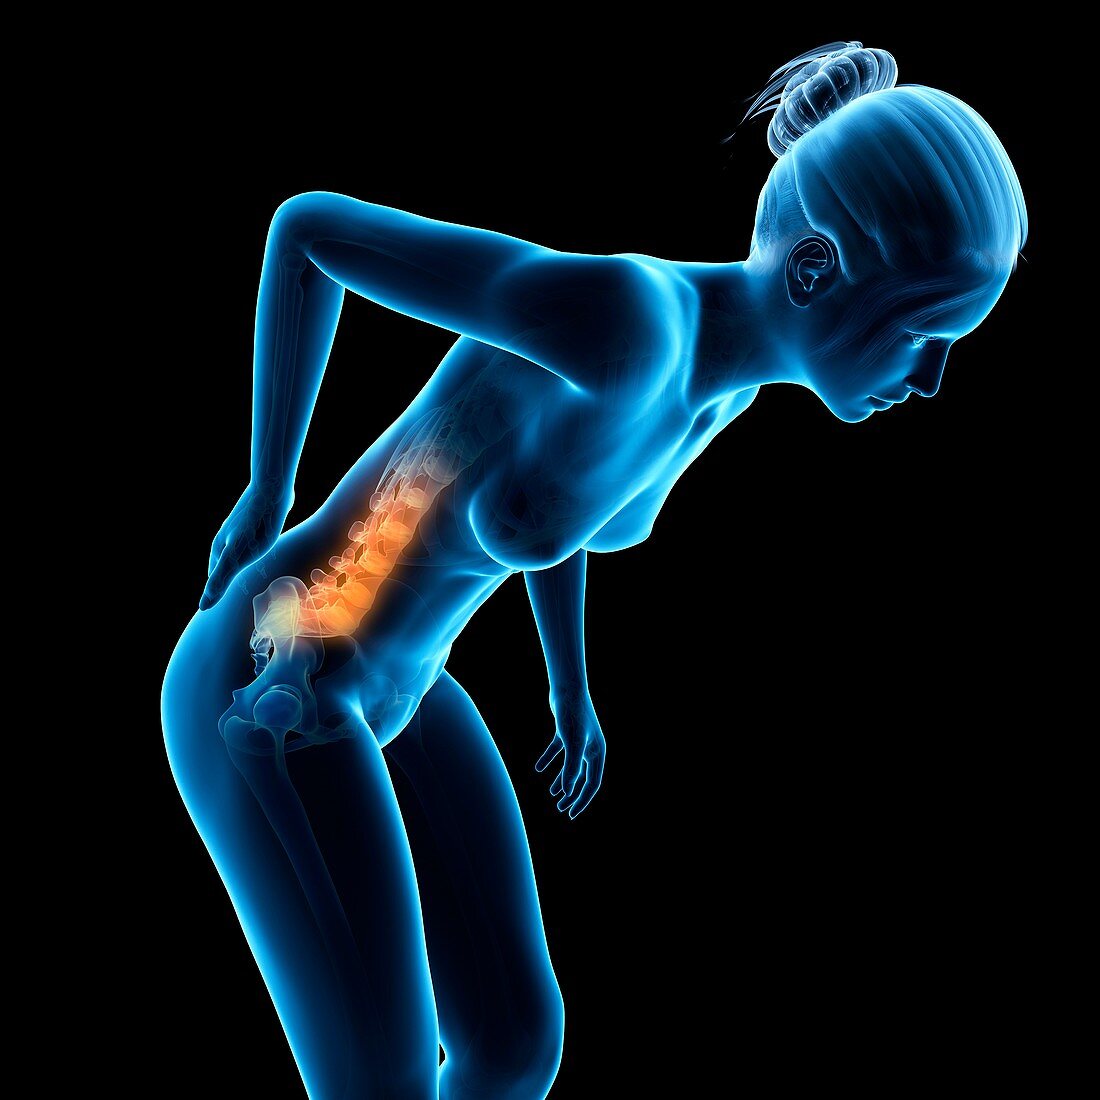 Human back pain,illustration